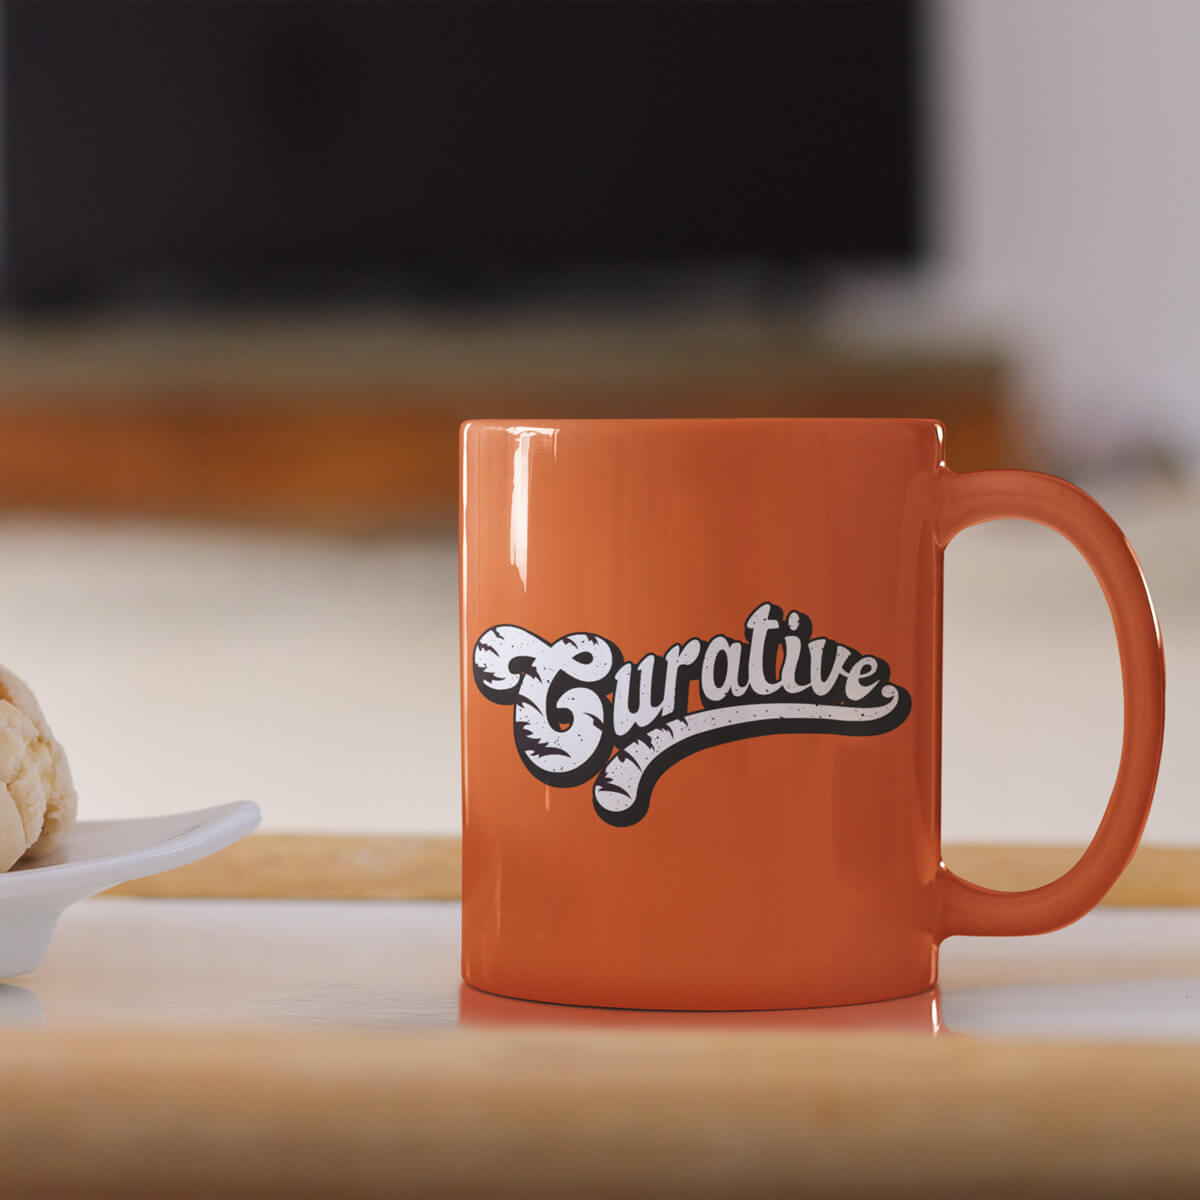 Table holding orange ceramic mugs custom promotional drinkware by curative printing